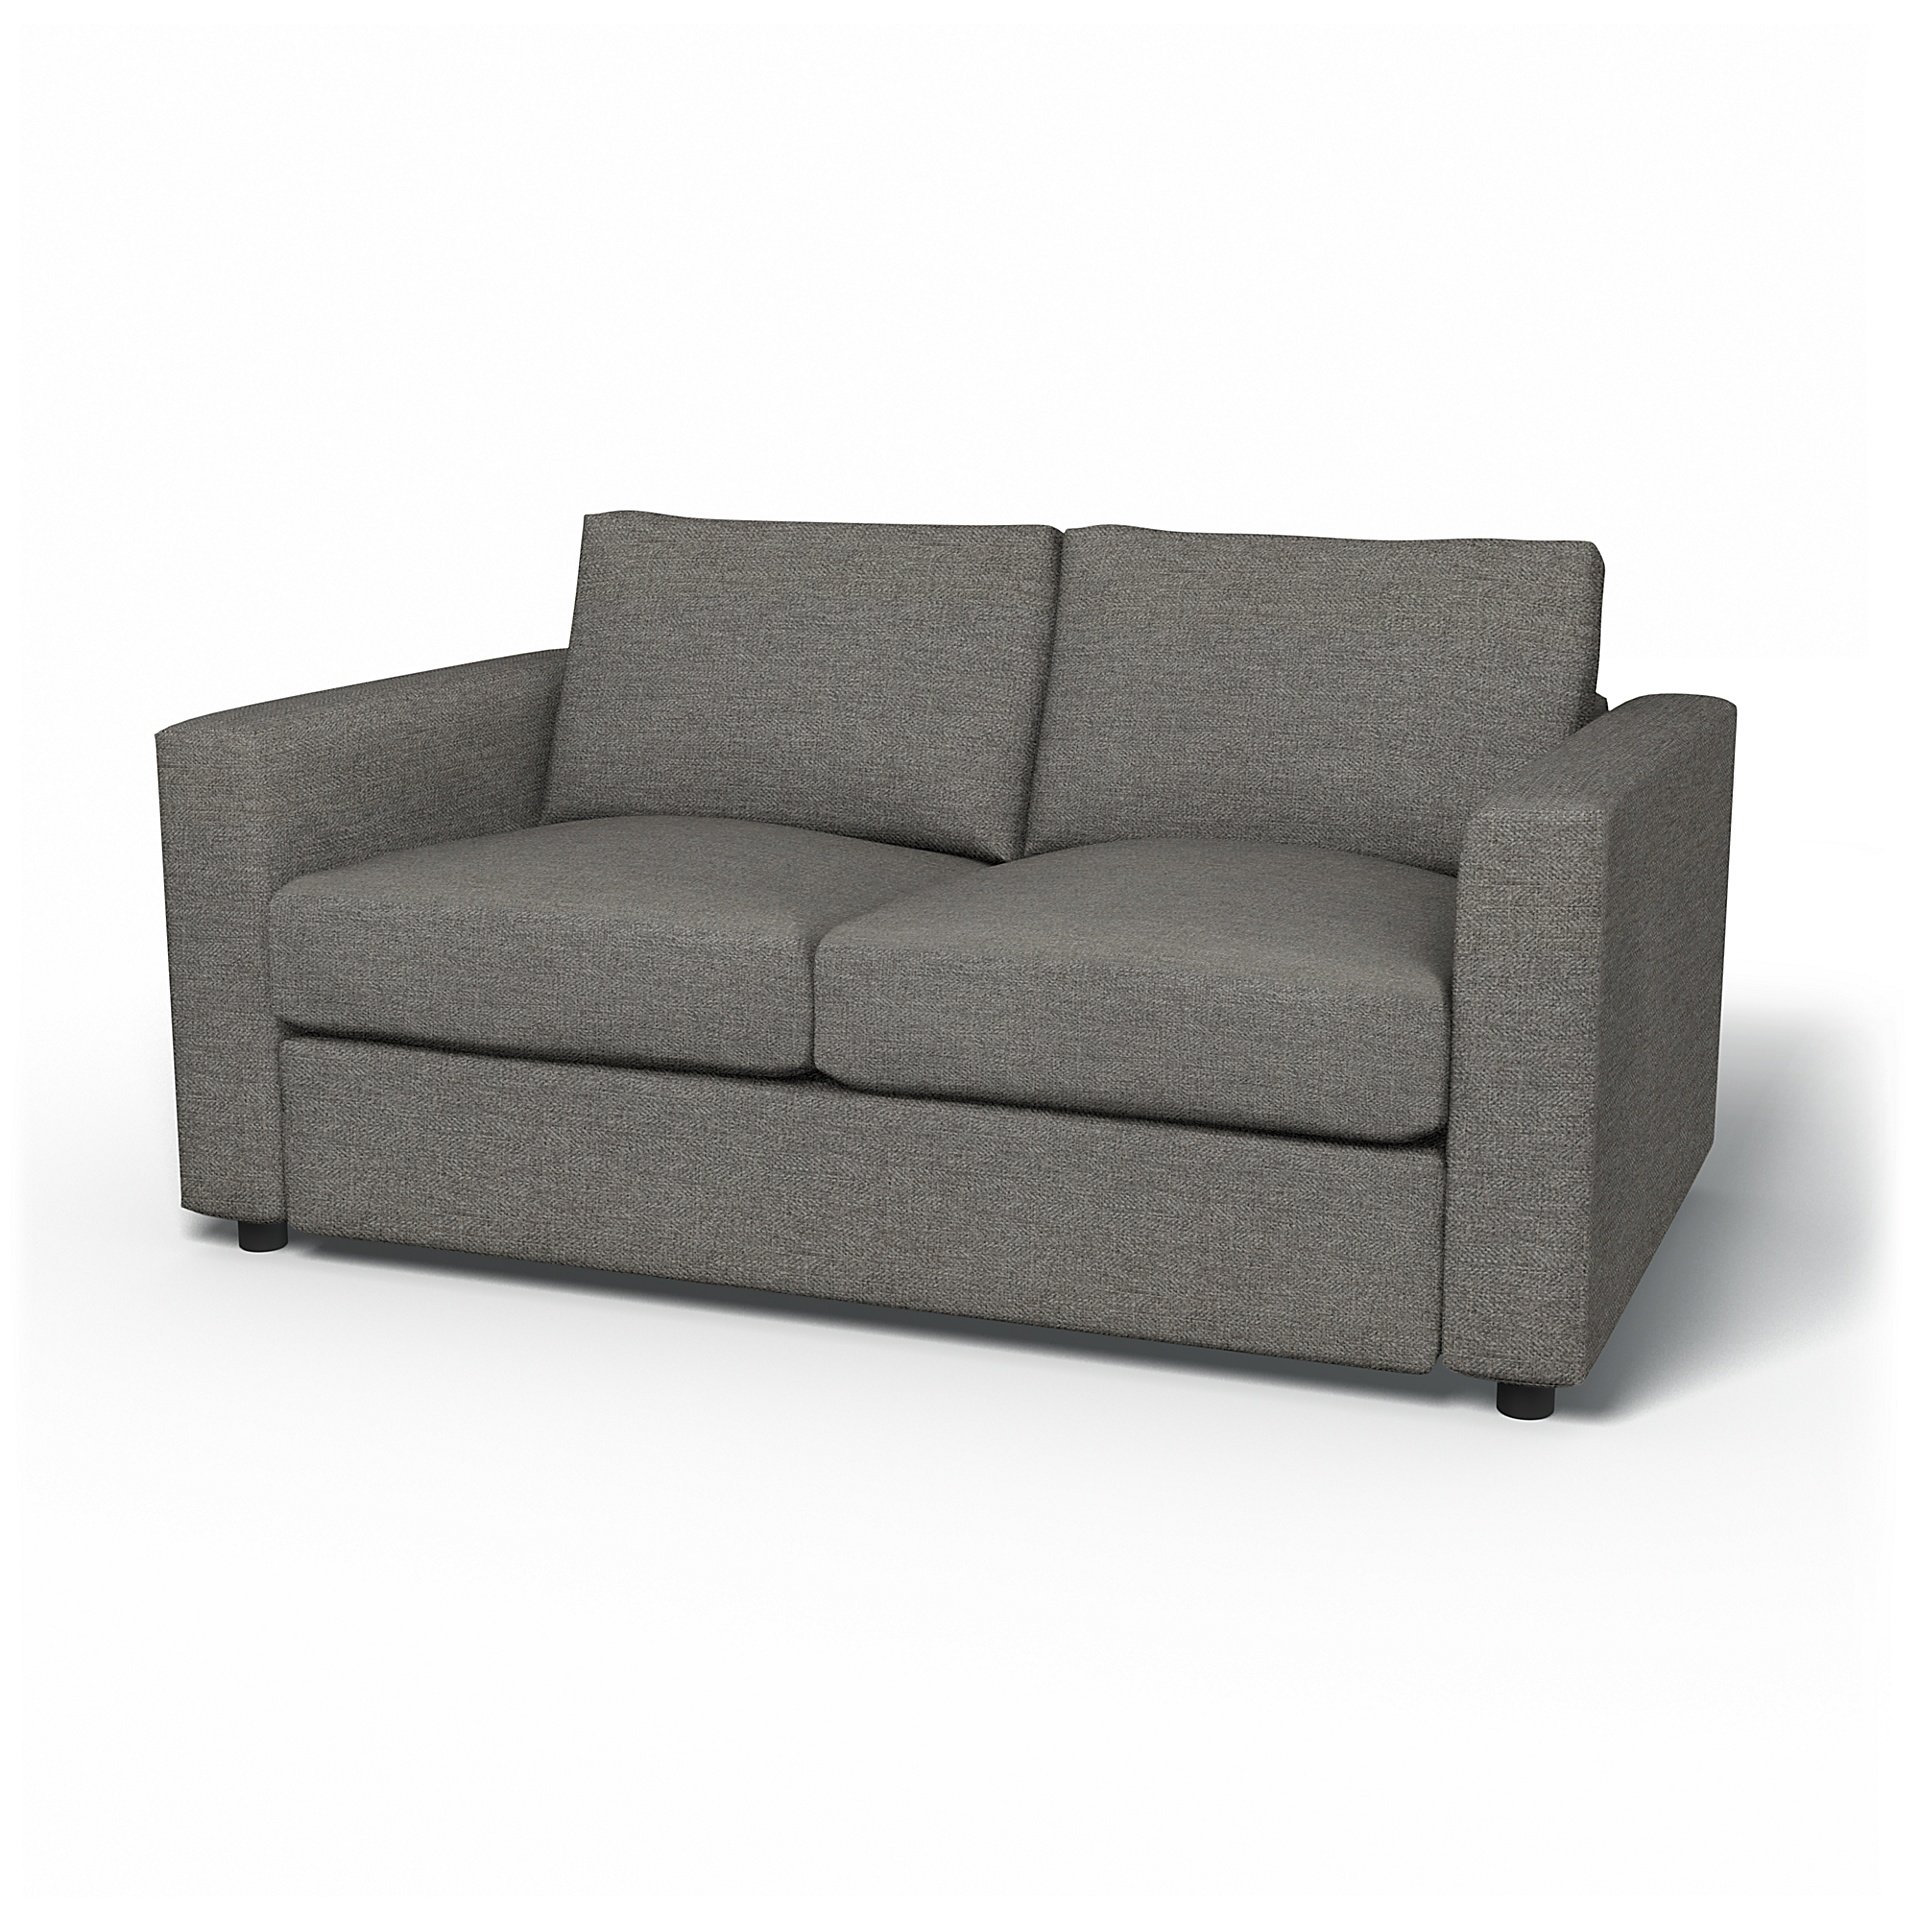 IKEA - Vimle 2 Seater Sofa Cover, Taupe, Boucle & Texture - Bemz